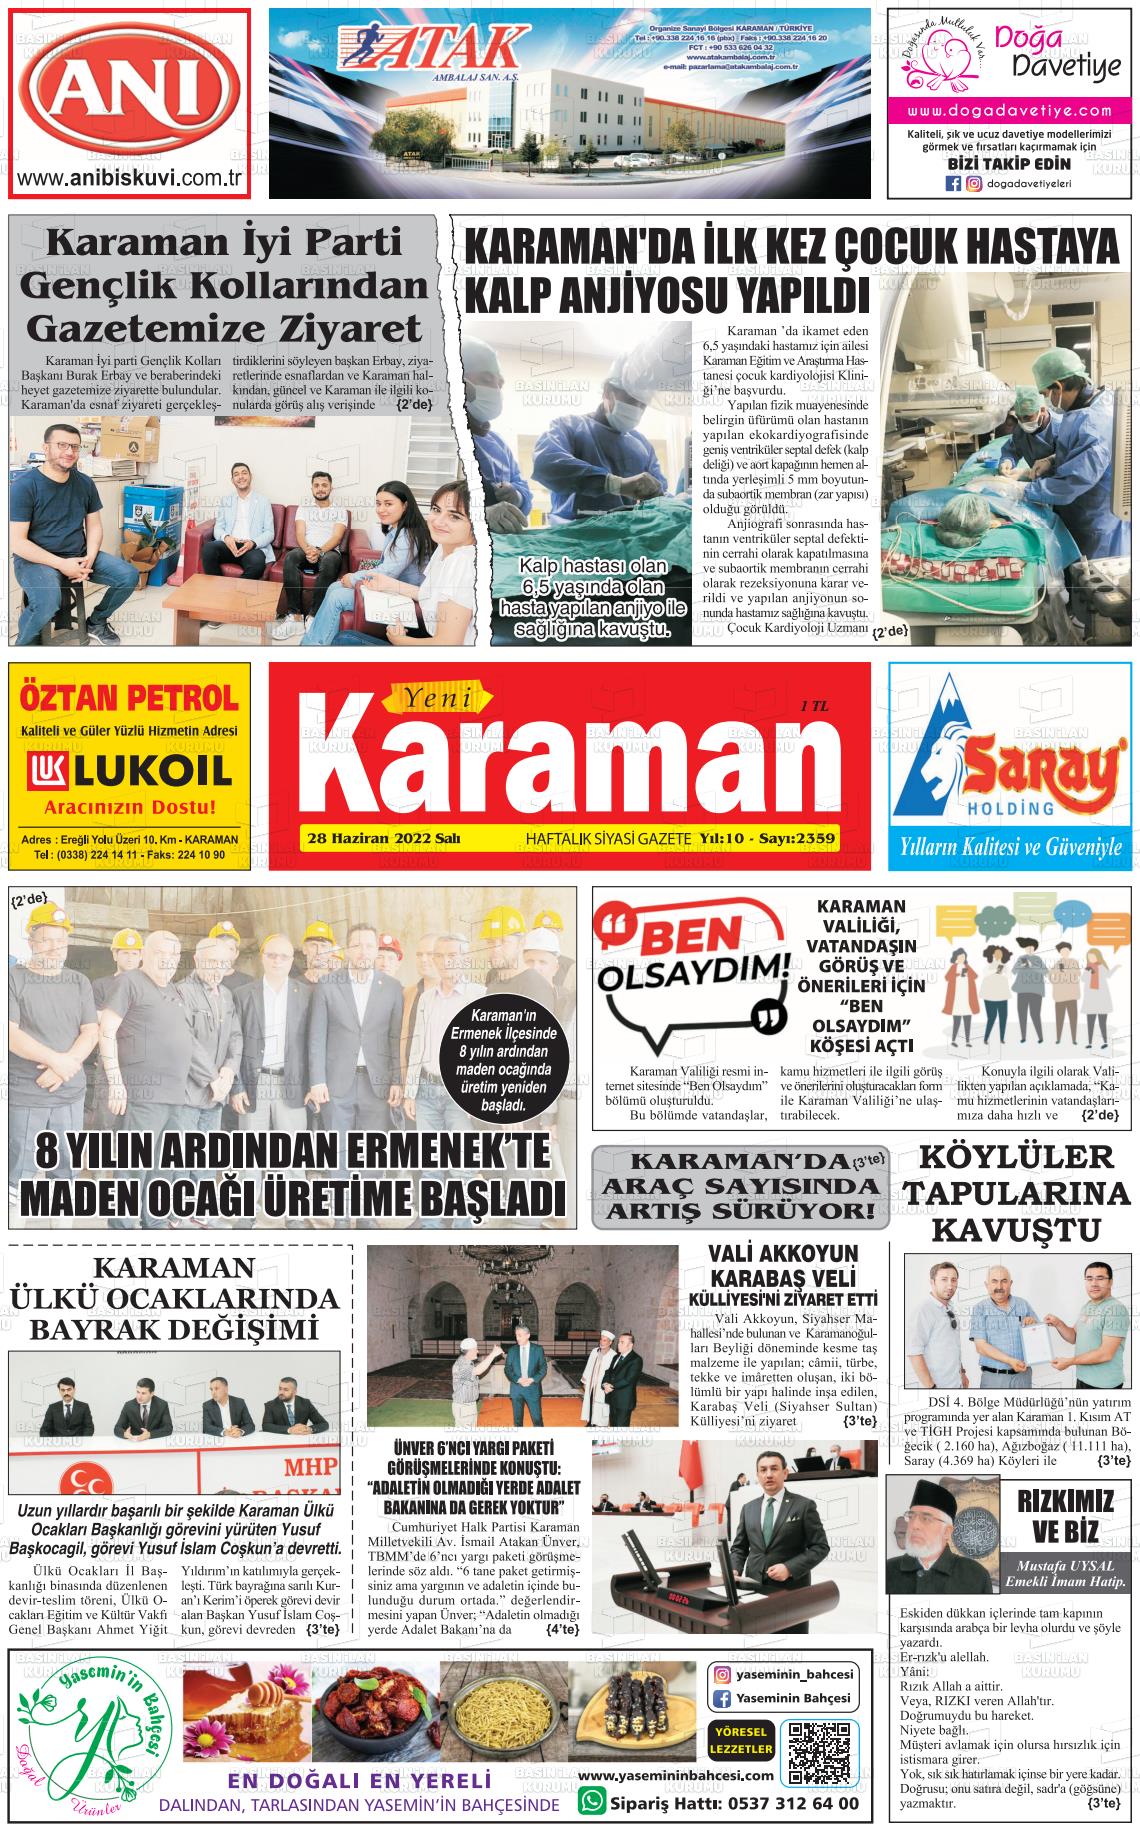 28 Haziran 2022 Yeni Karaman Gazete Manşeti